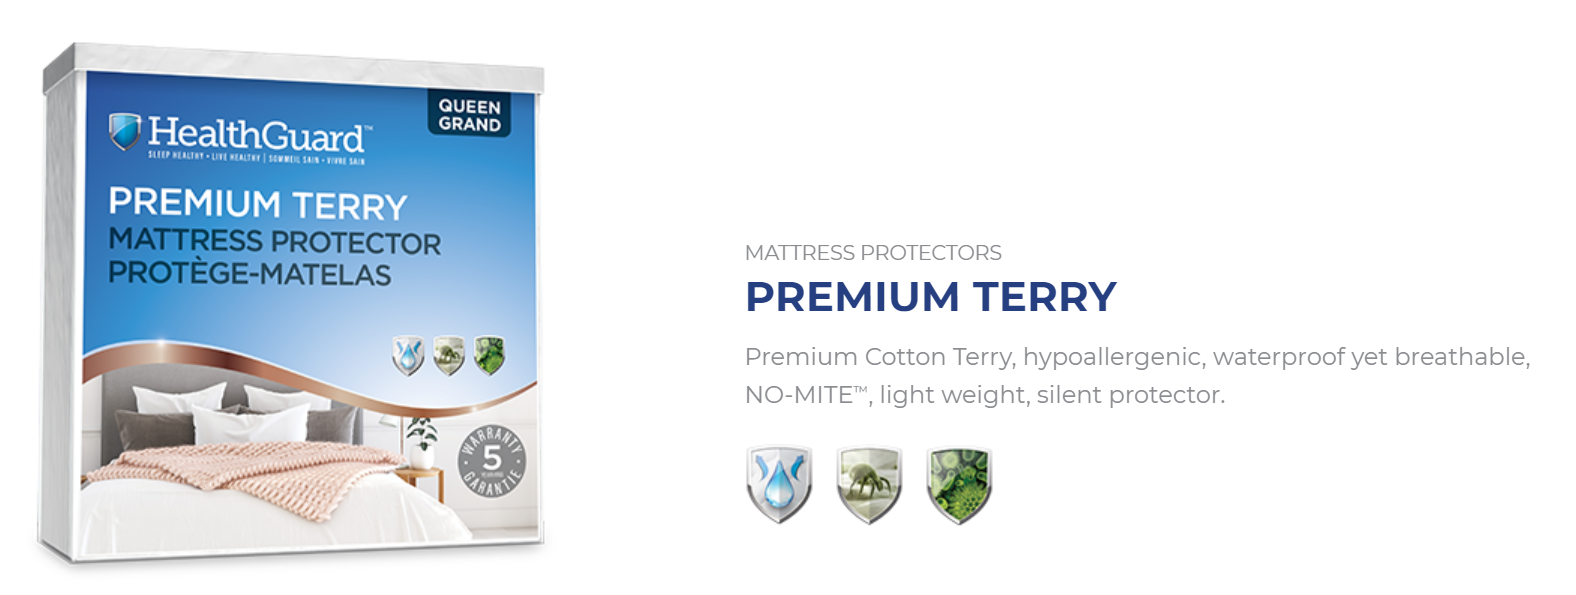 Healthguard Premium Terry Mattress Protector Banner